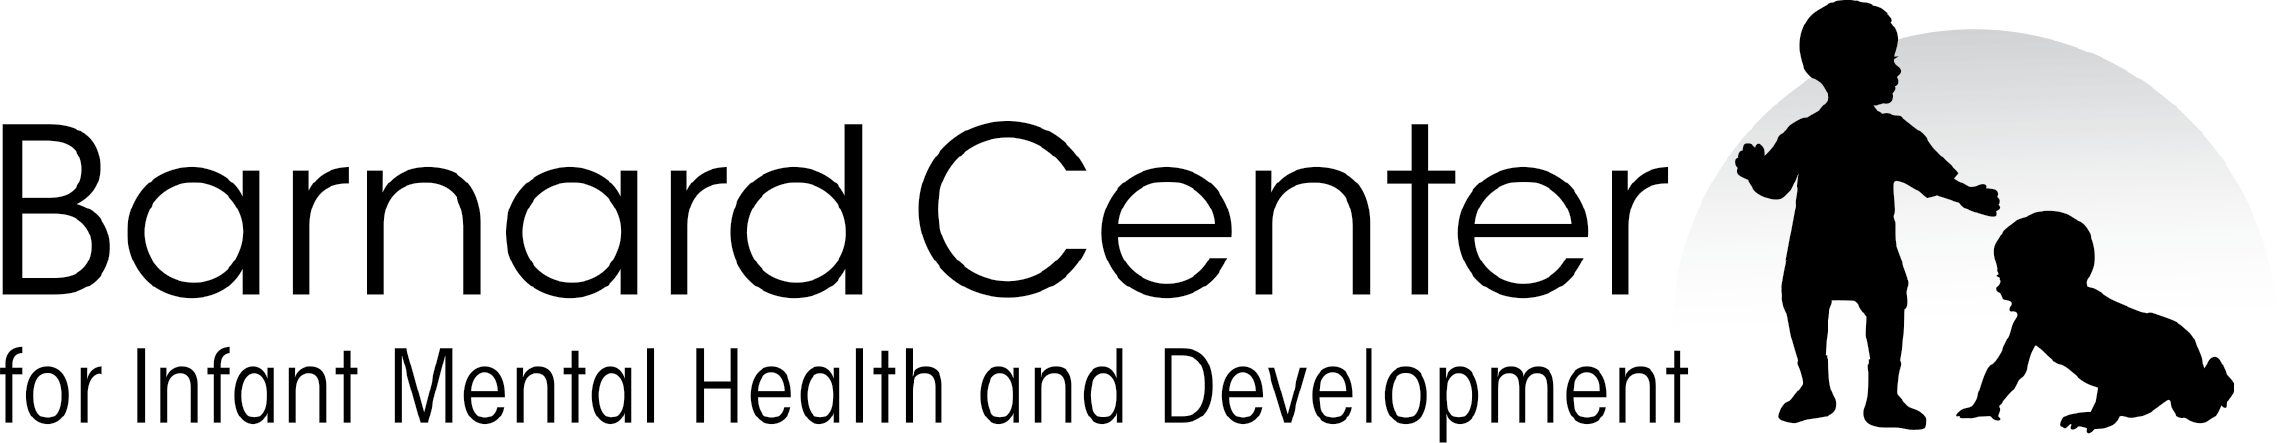 barnard_center-logo-BW